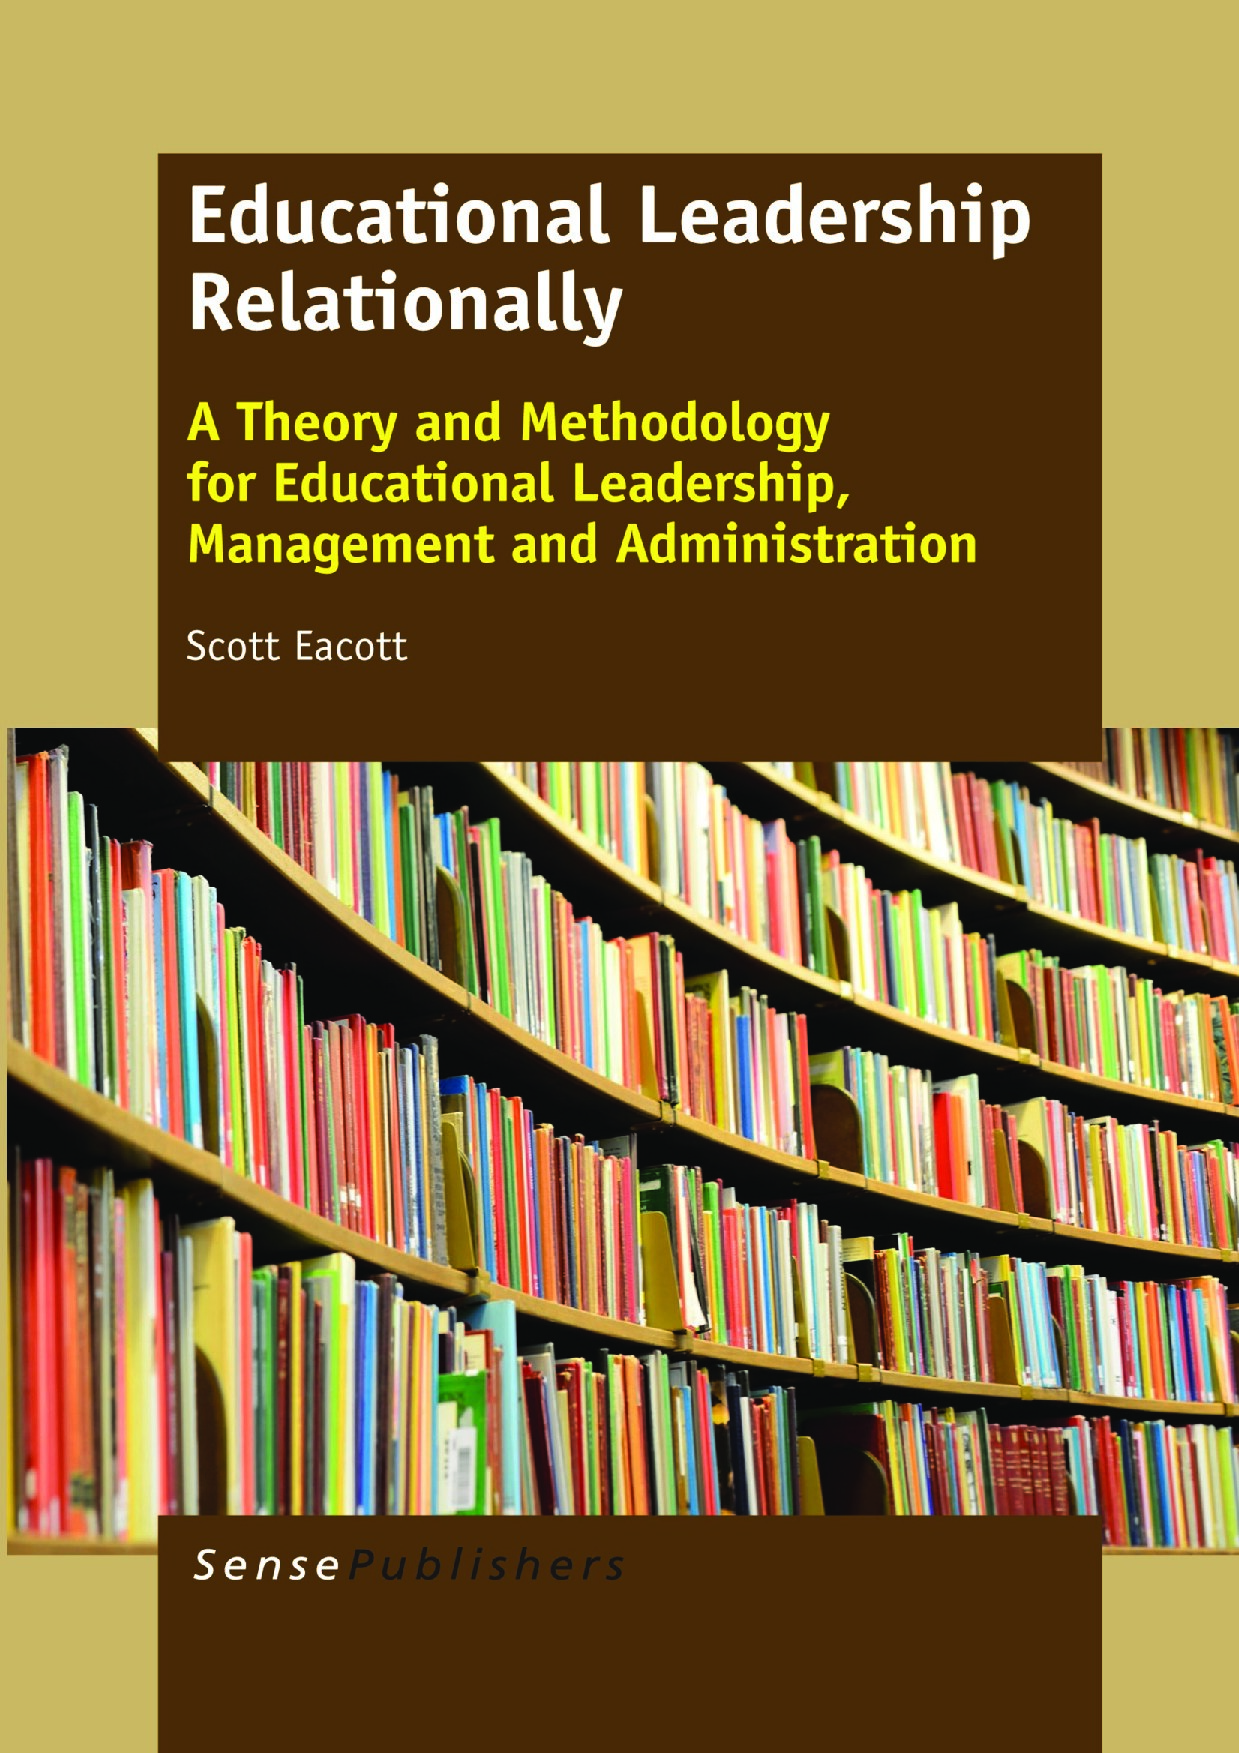 Educational Leadership Relationally 2015